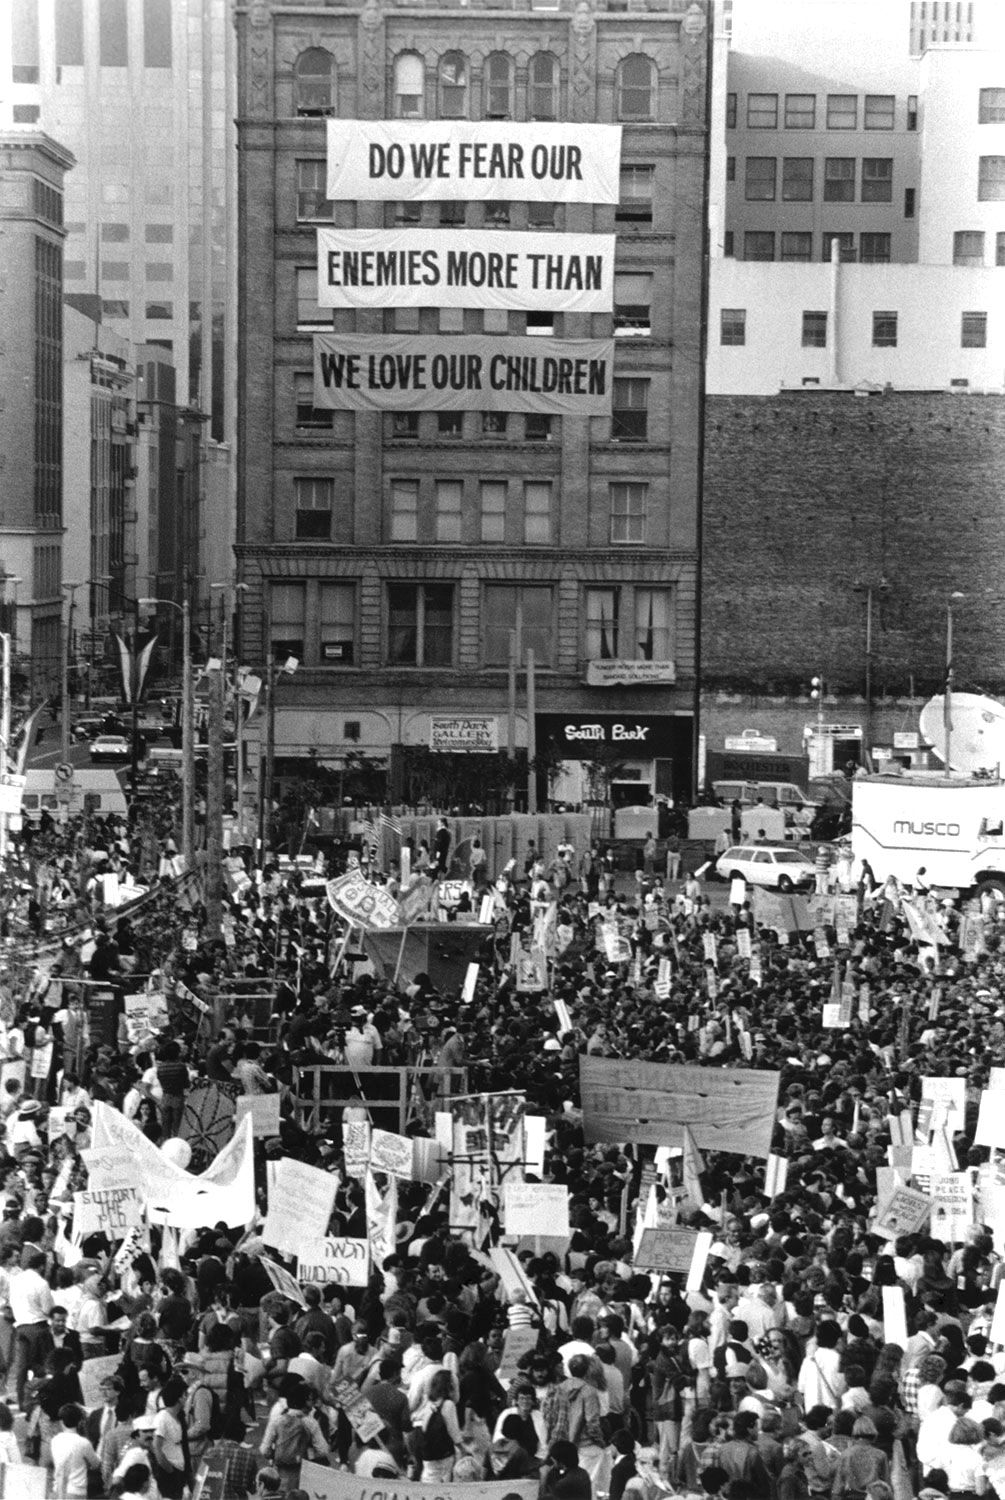  Democratic Convention 1984, Street Protest&nbsp; 